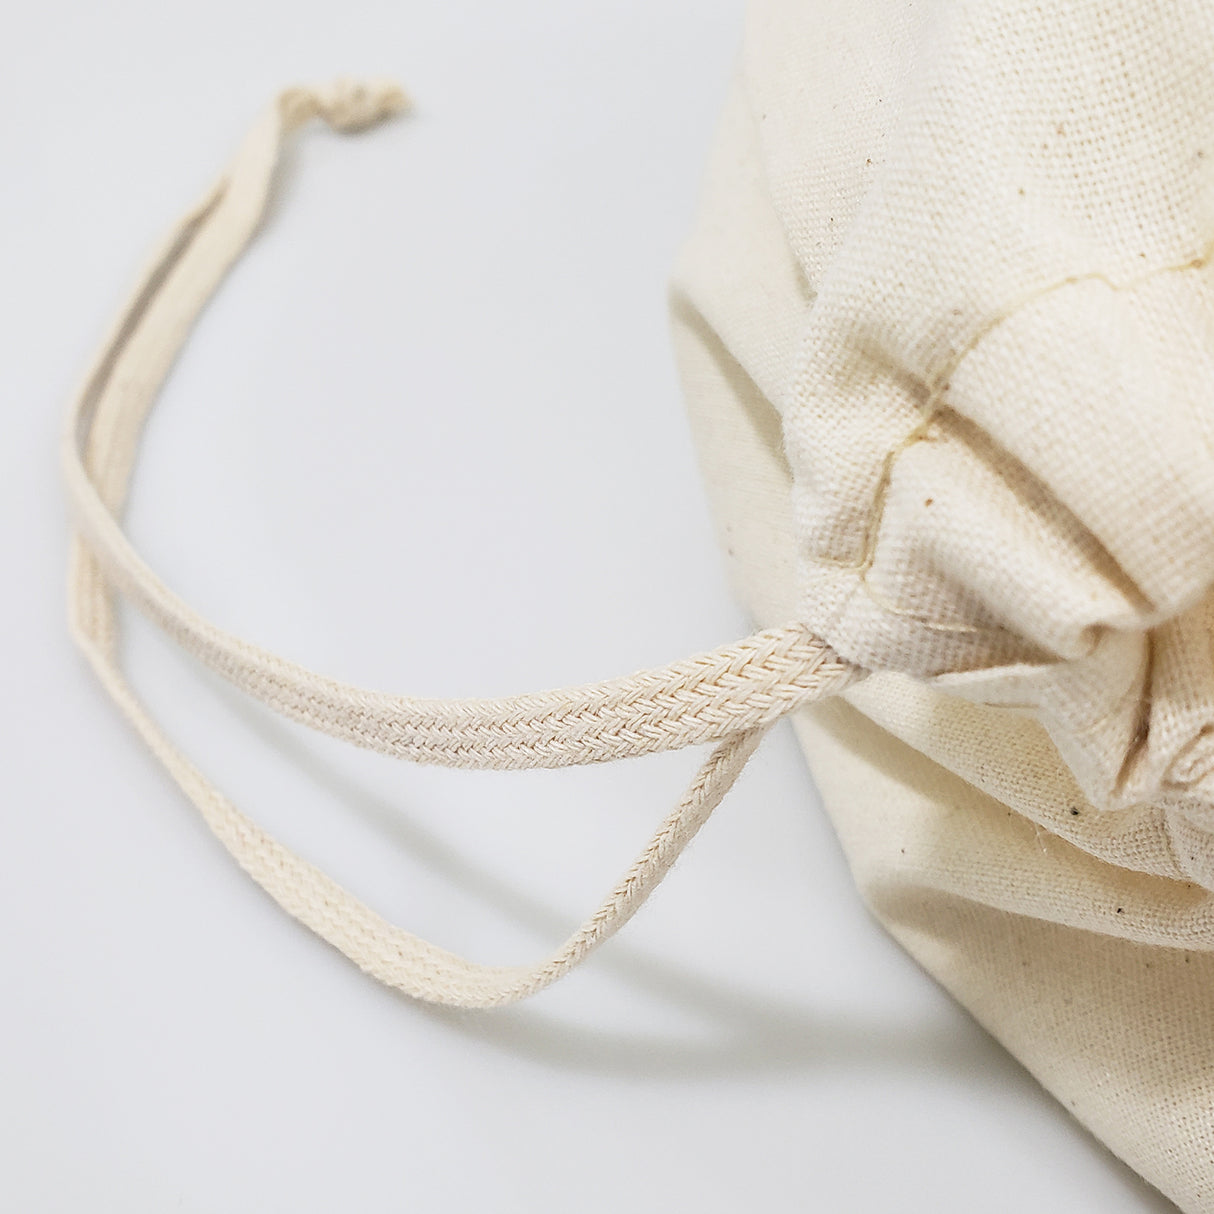 12 ct Bulk Cotton Shoe Bags / Affordable Drawstring Bags - By Dozen